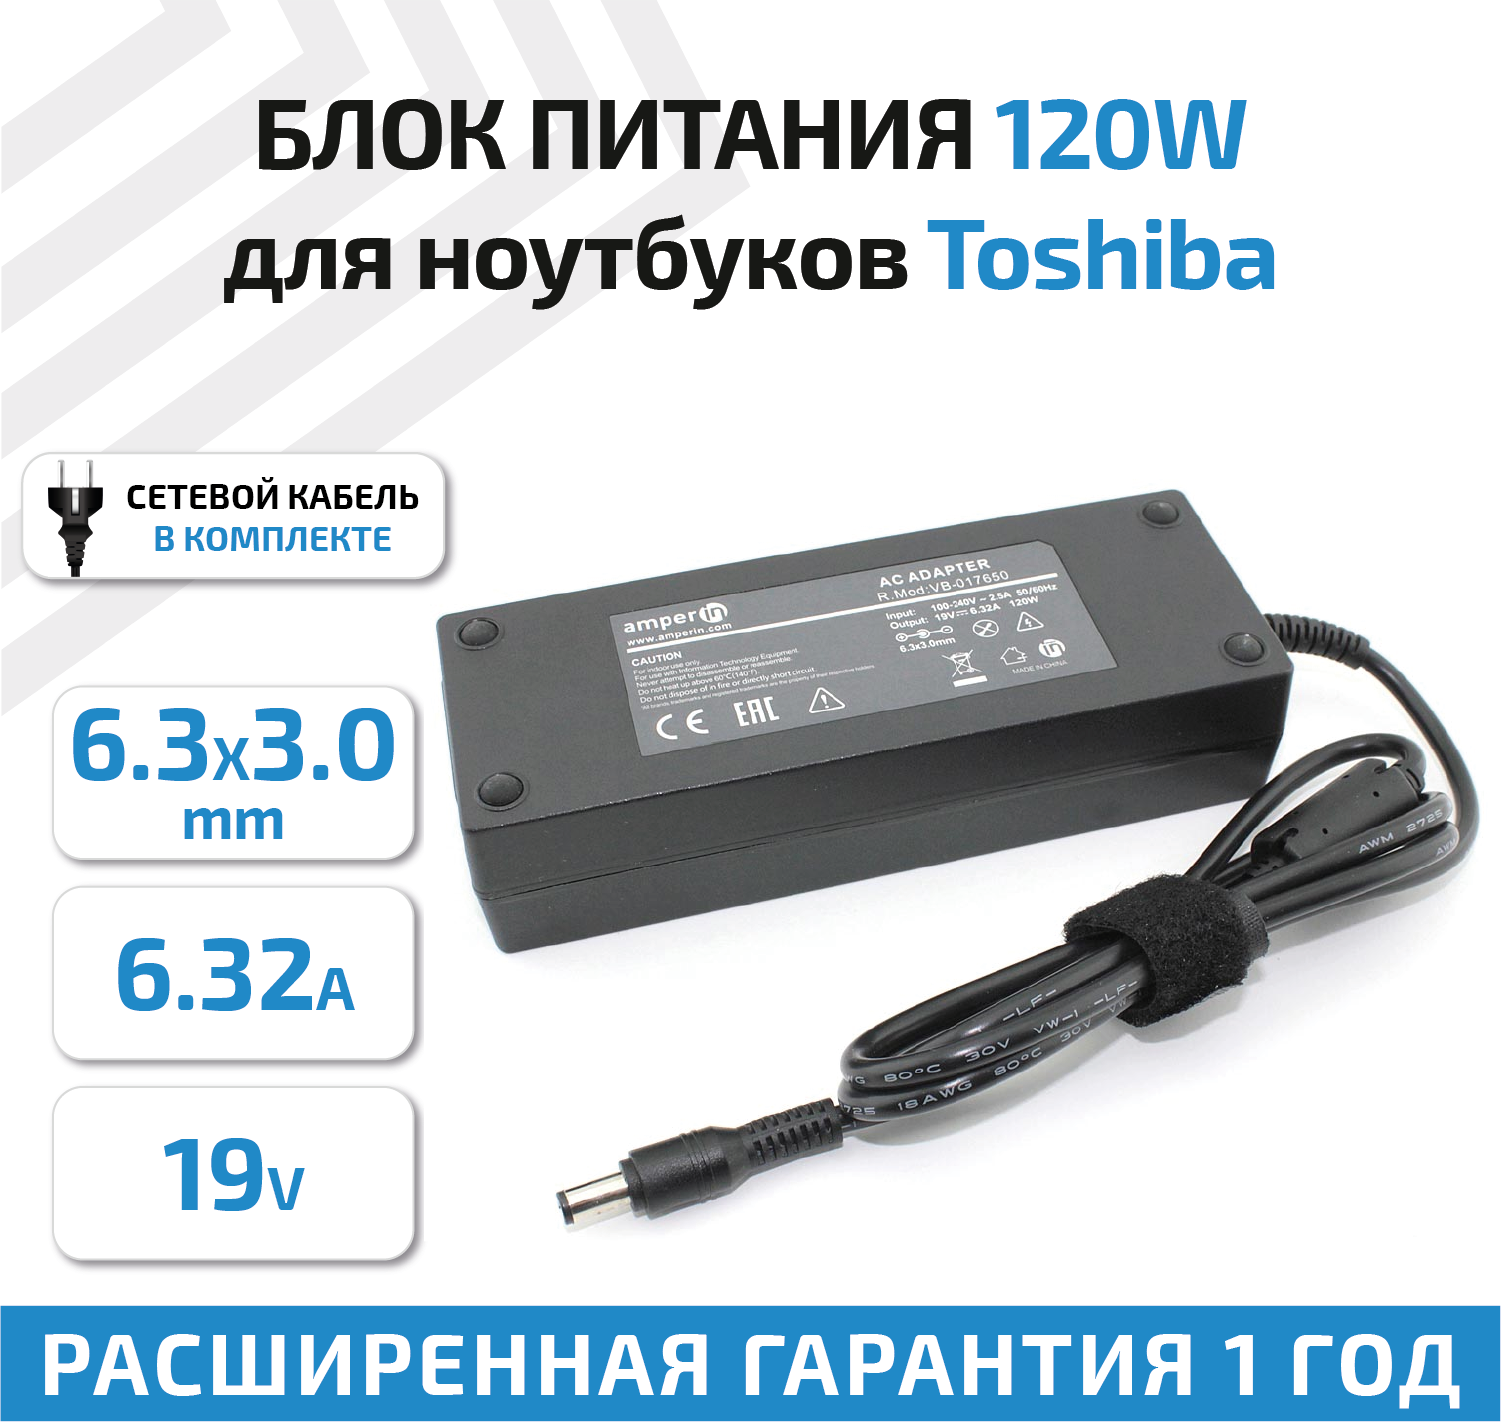 Зарядное устройство (блок питания/зарядка) Amperin AI-TS120B для ноутбука Toshiba, 19В, 6.32А, 6.3x3.0мм